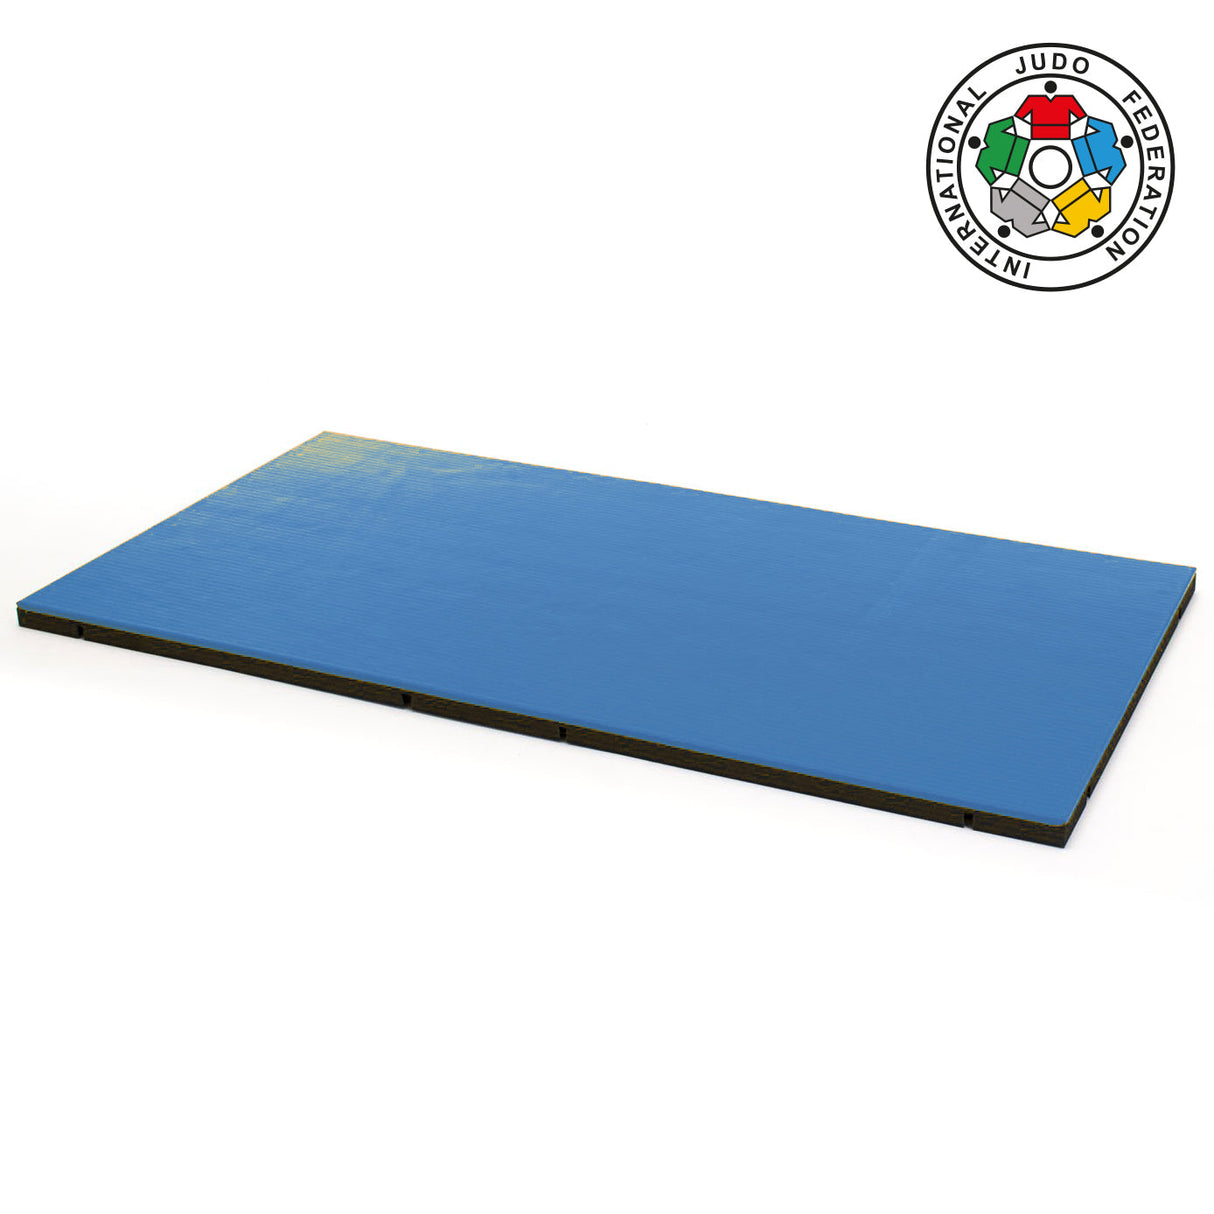 Trocellen Judo Tatami I-TIS Judo IJF 2x1 m - blau - 5cm, 85266001-B